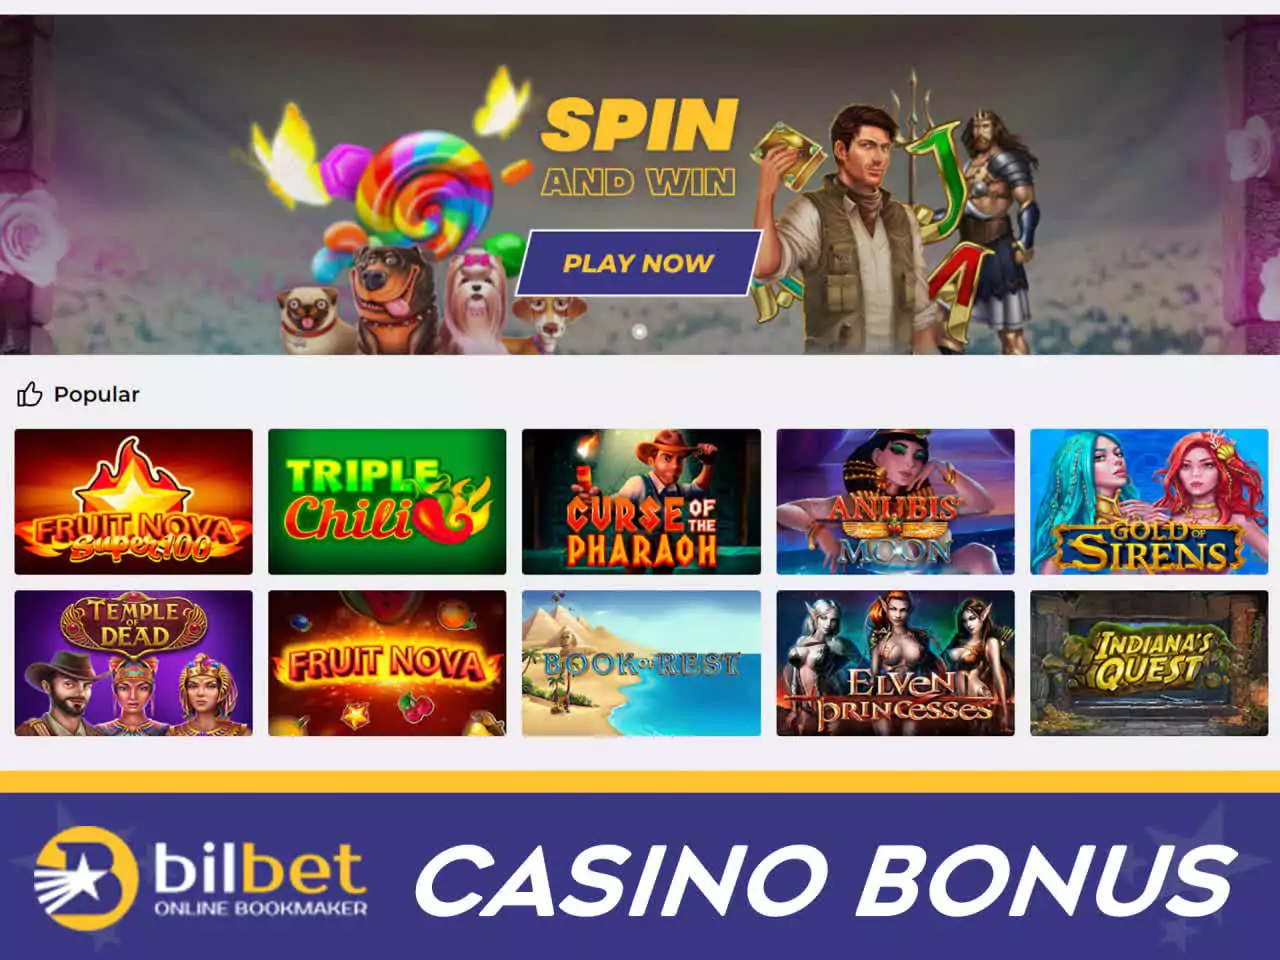 Register at Bilbet and receive the casino bonus.